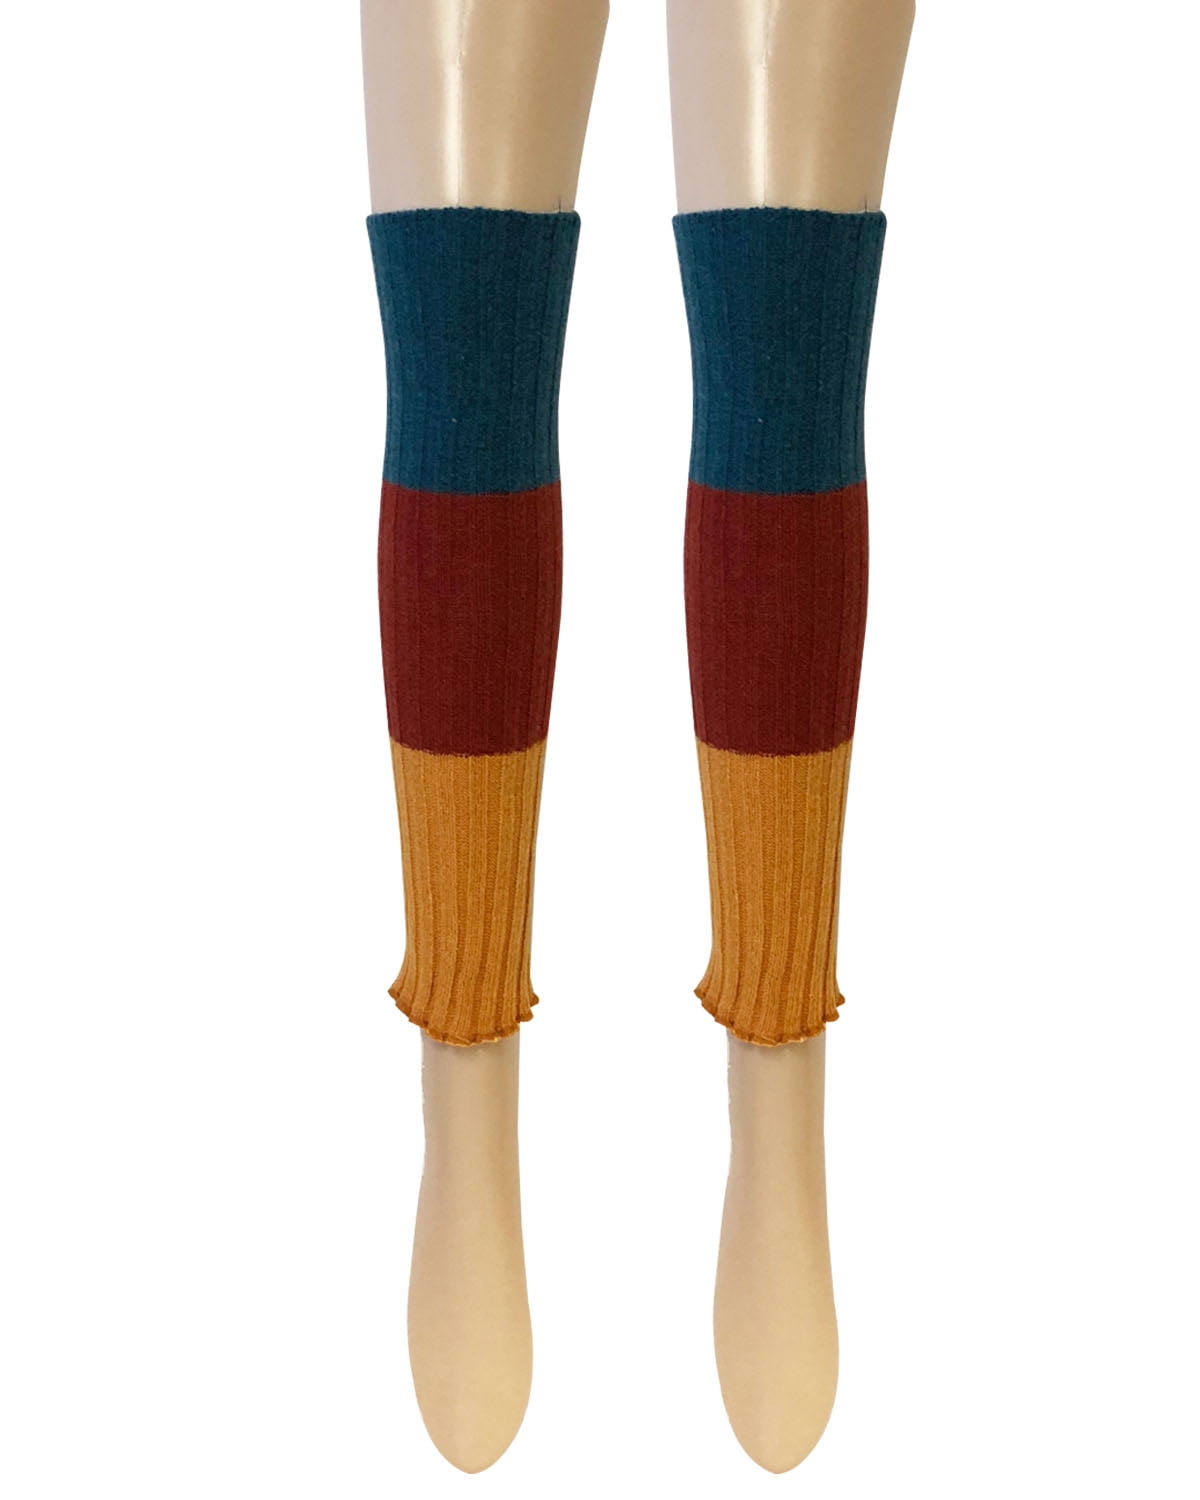 Grey Leg Warmers Grey With Pink Referee Stripes Stirrup Dance/Ballet Leg Warmers